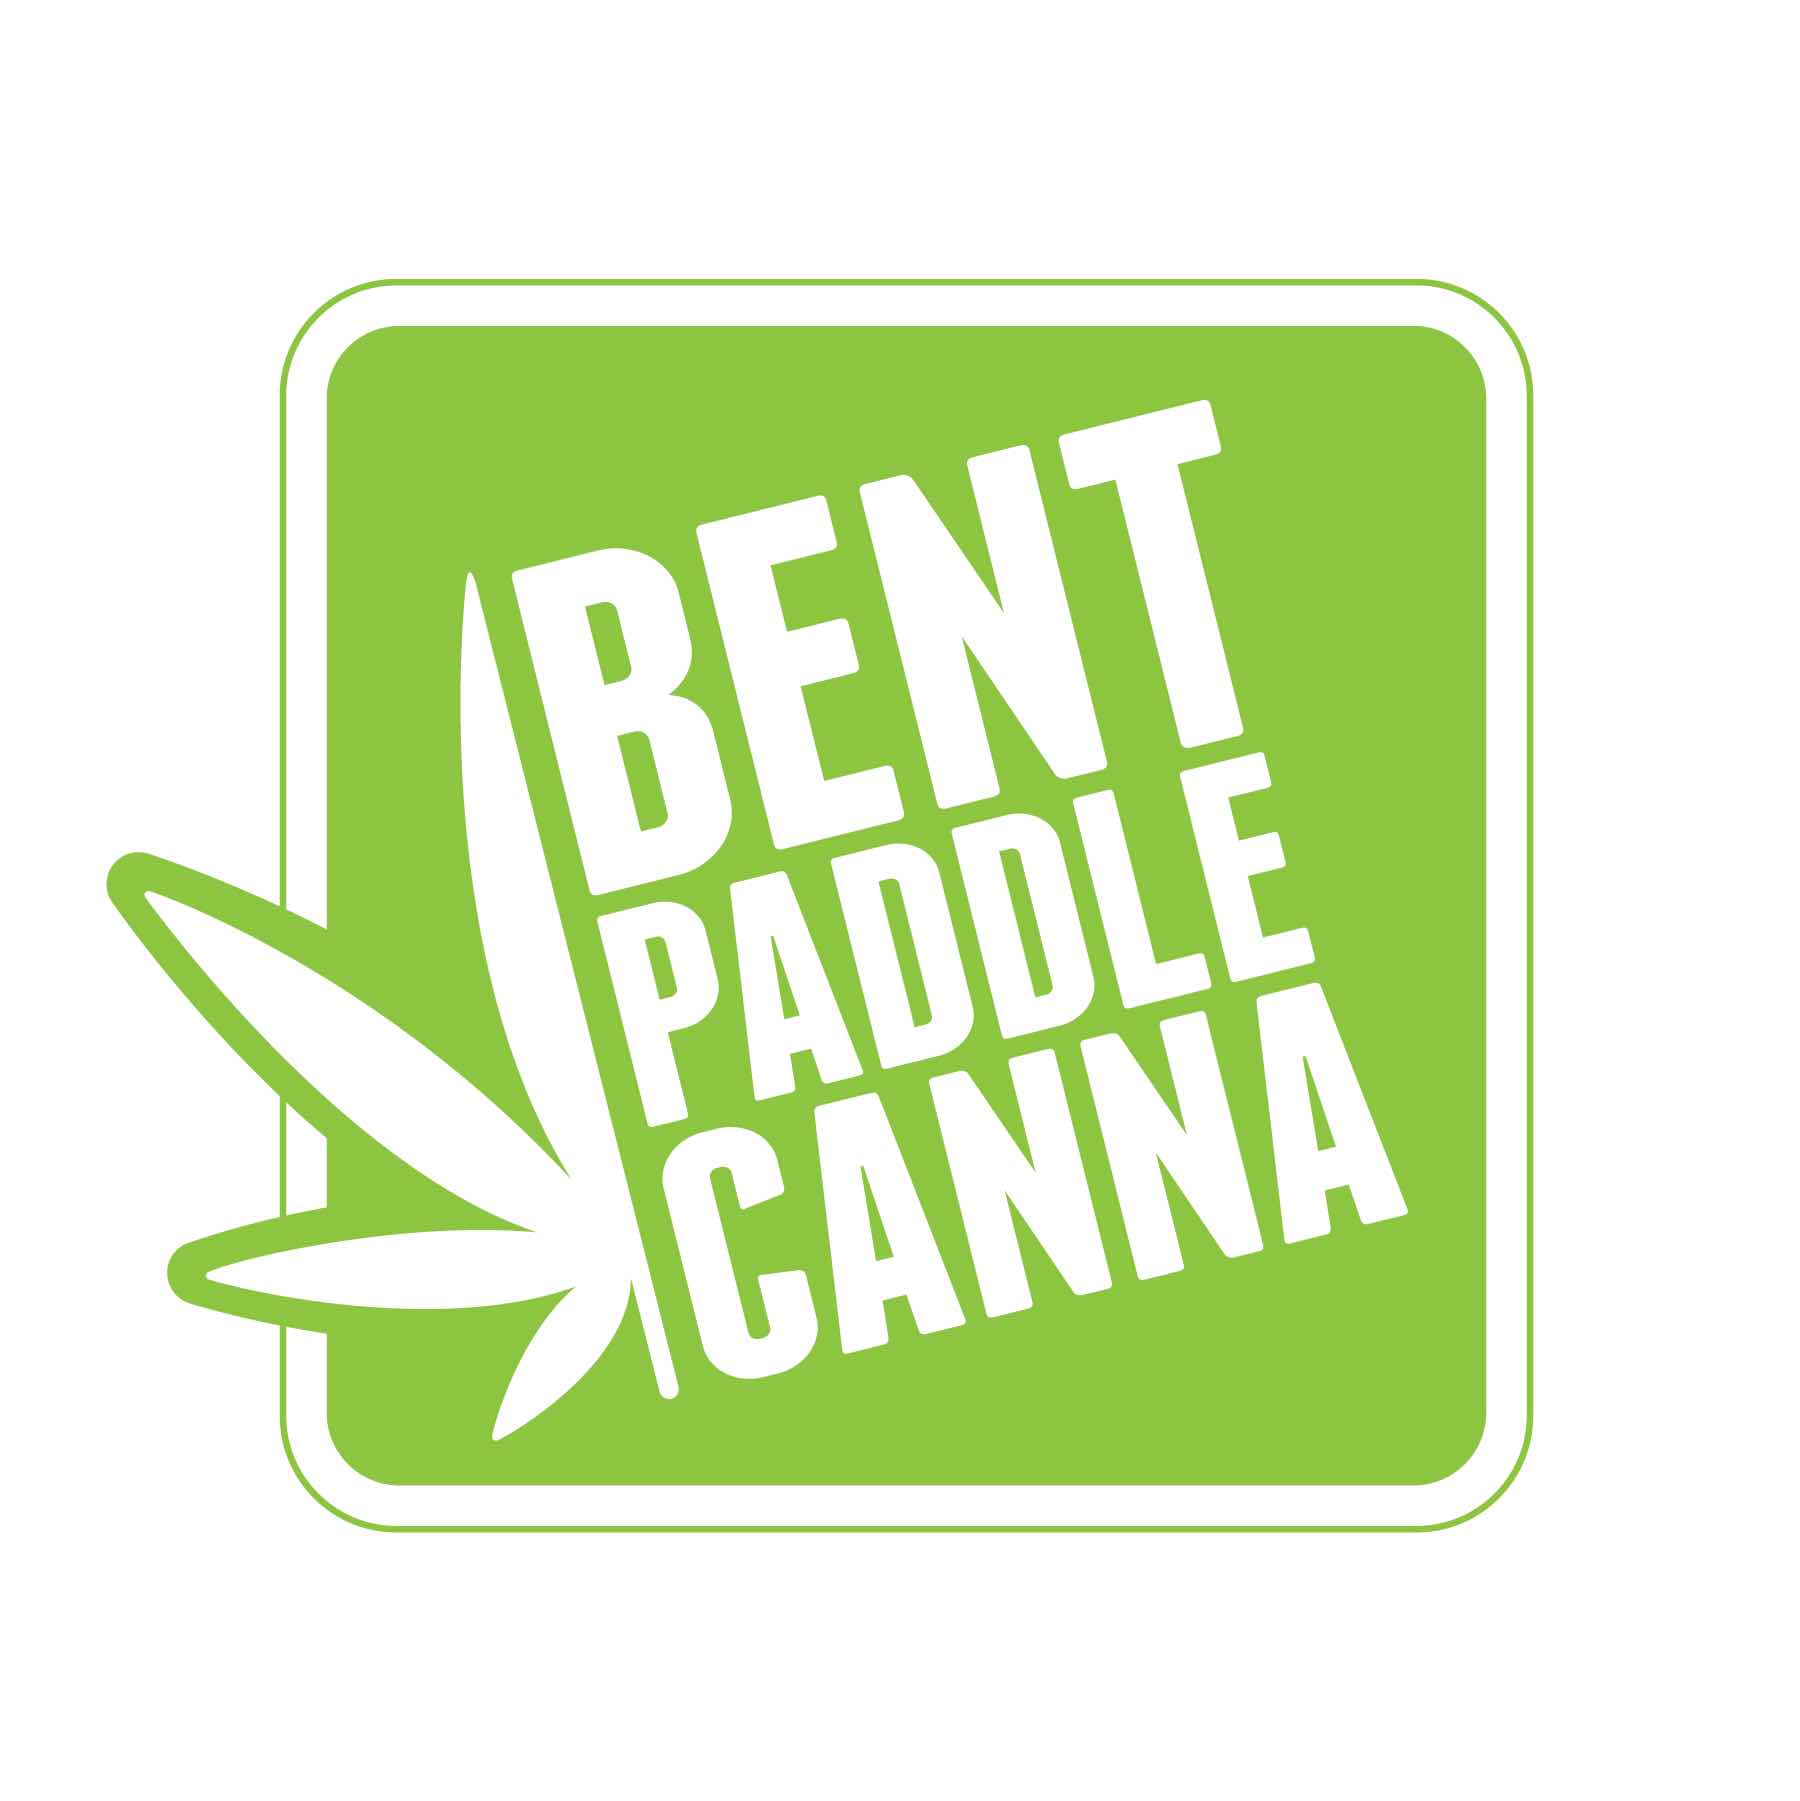 Bent Paddle Canna Logo